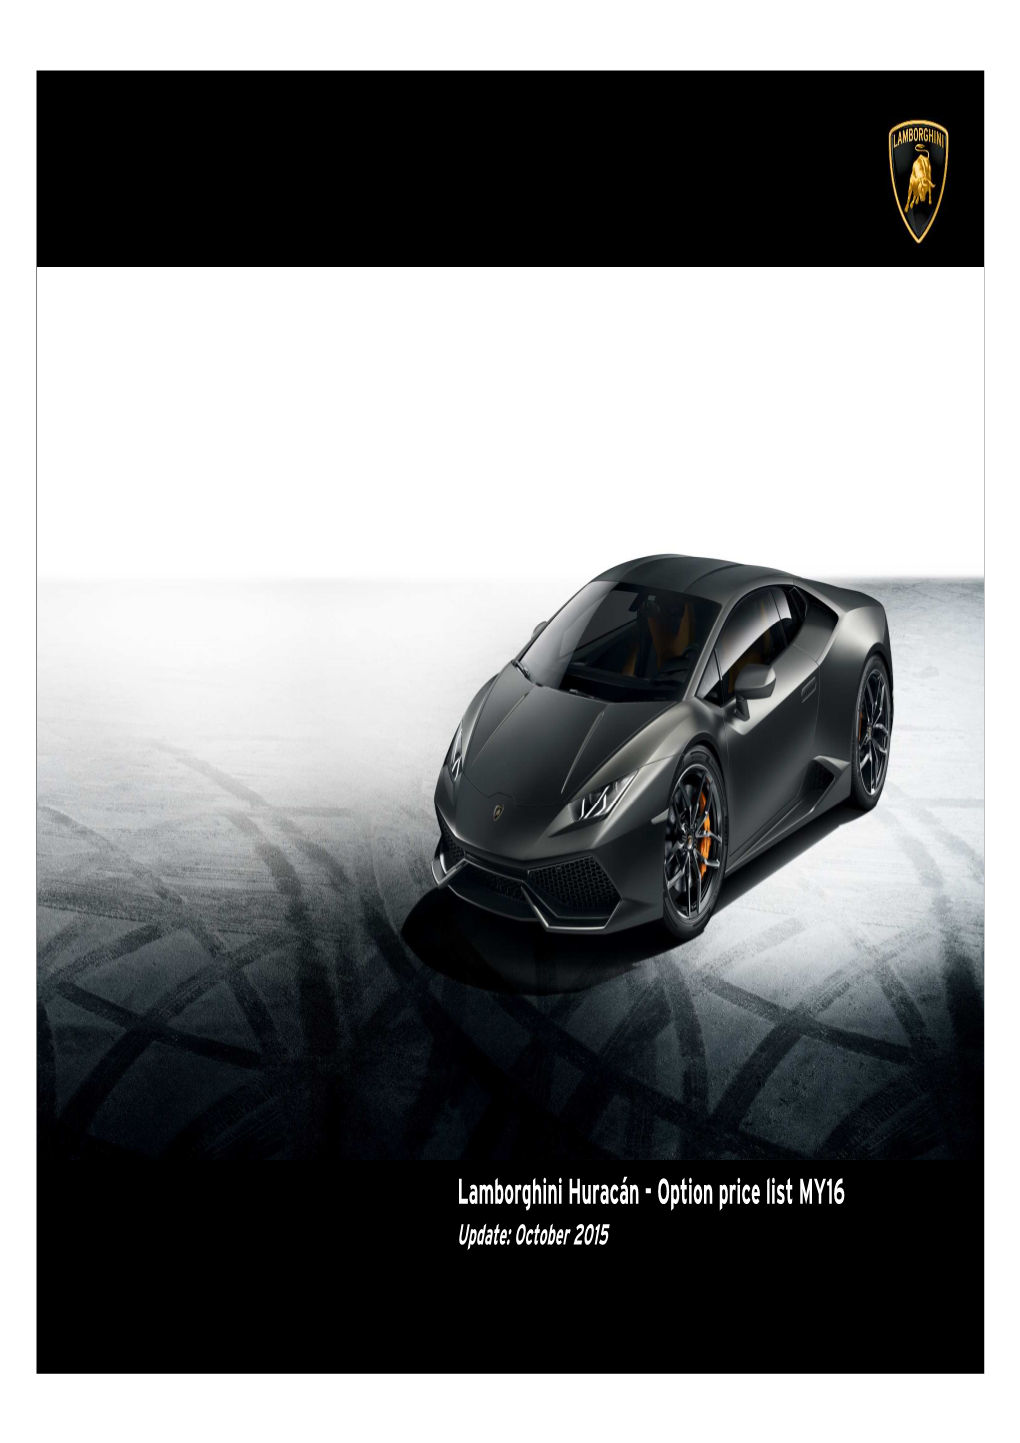 Lamborghini Huracán - Option Price List MY16 Update: October 2015 Automobilireservesthe Lamborghini Rights.P.A